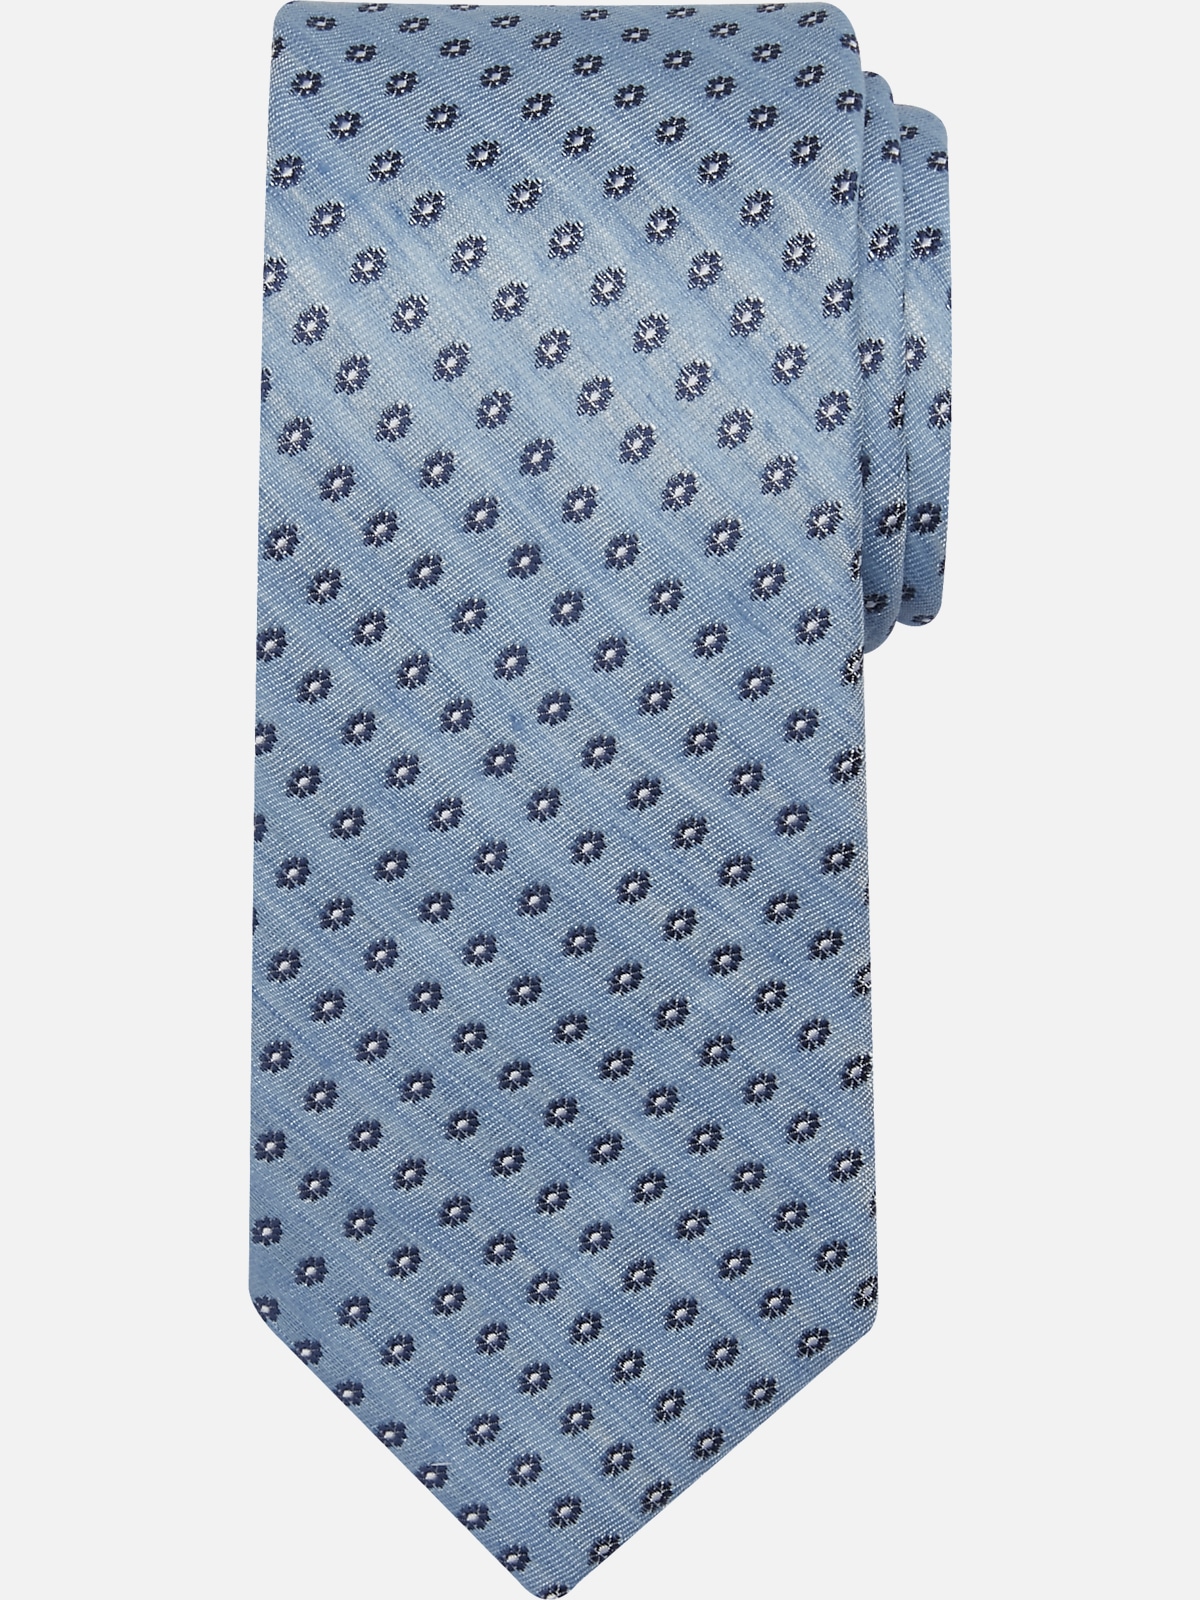 Pronto Uomo Narrow Dot Tie | All Clearance $39.99| Men's Wearhouse